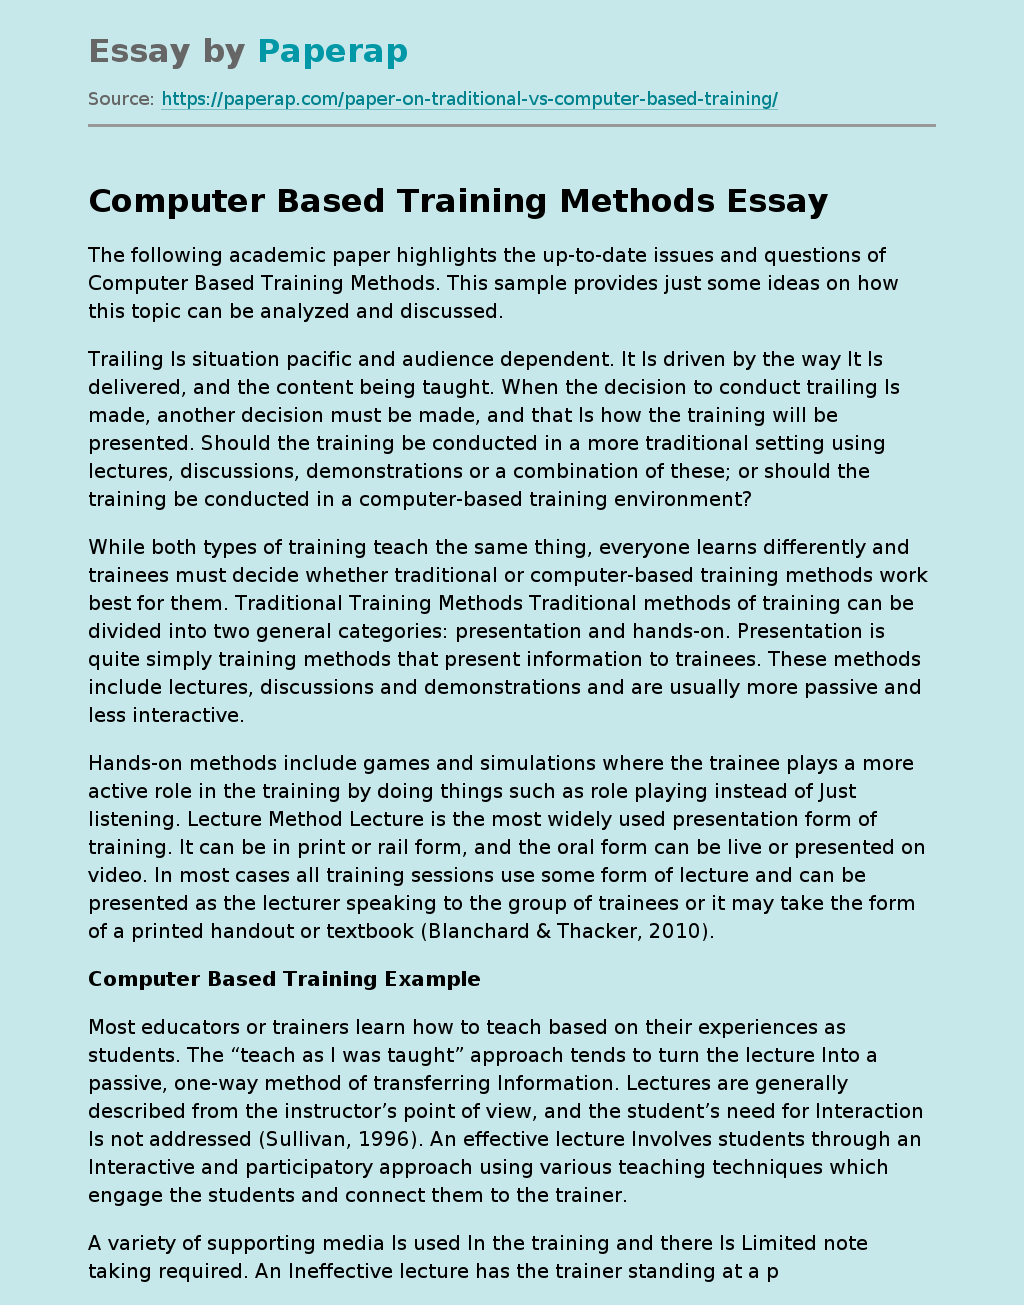 Computer Based Training Methods